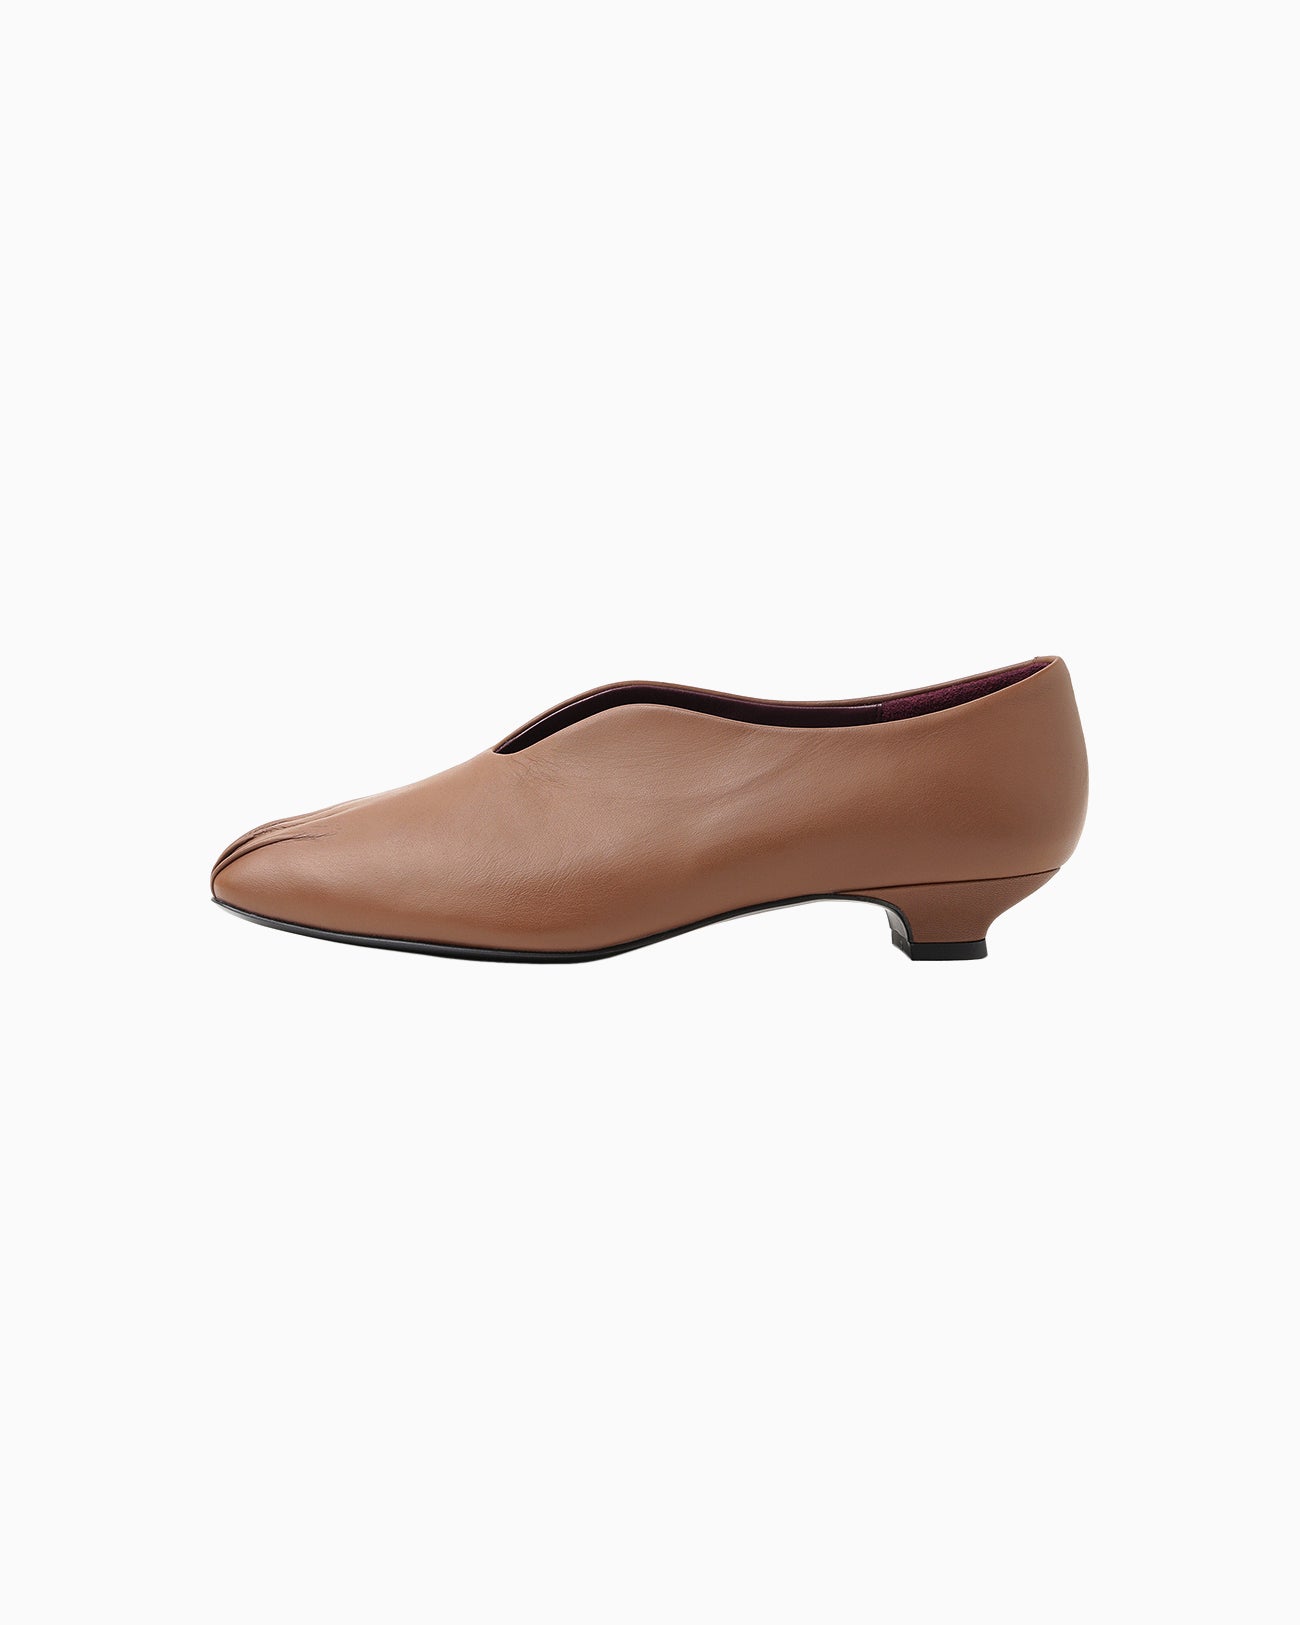 Curved Line Low Heel Slip-on - brown